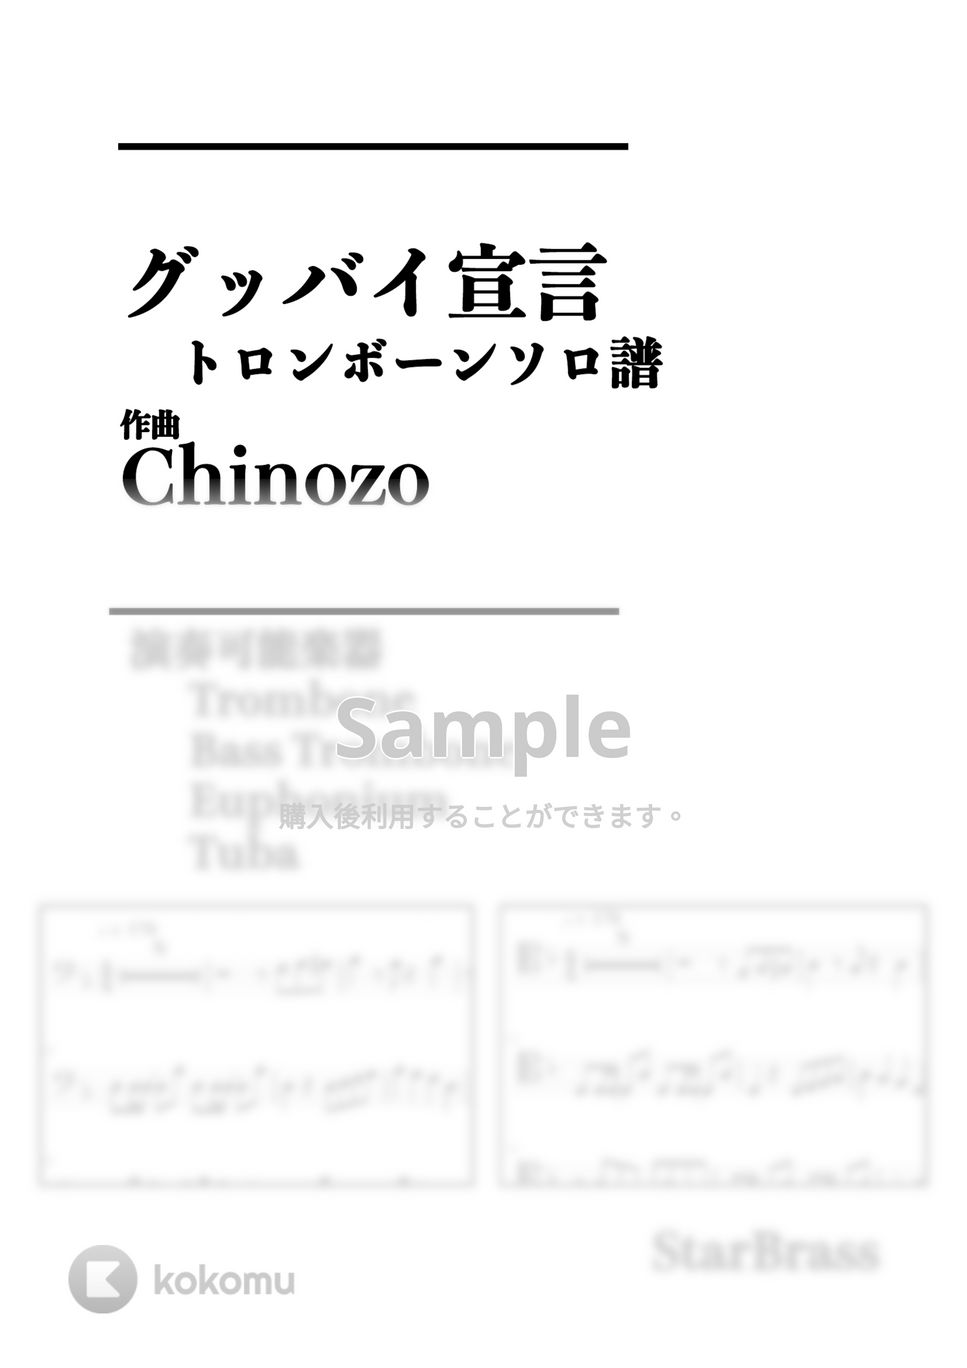 Chinozo - グッバイ宣言 (-Trombone Solo- 原キー) by Creampuff